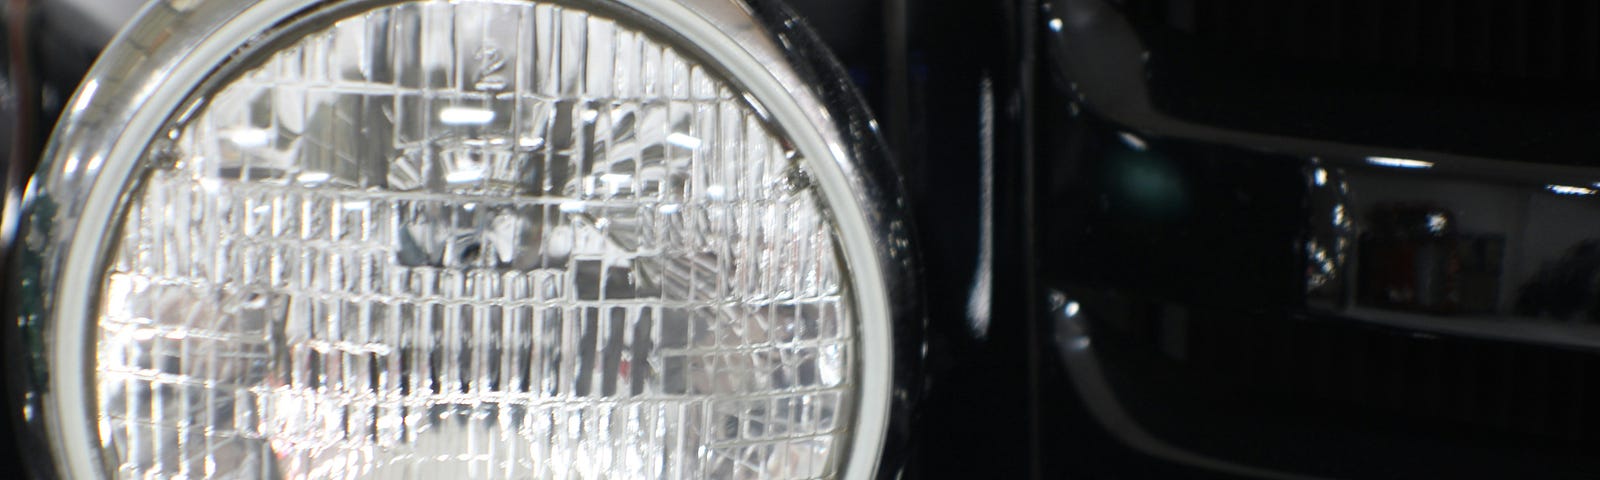 Close-up photo of truck headlamp.